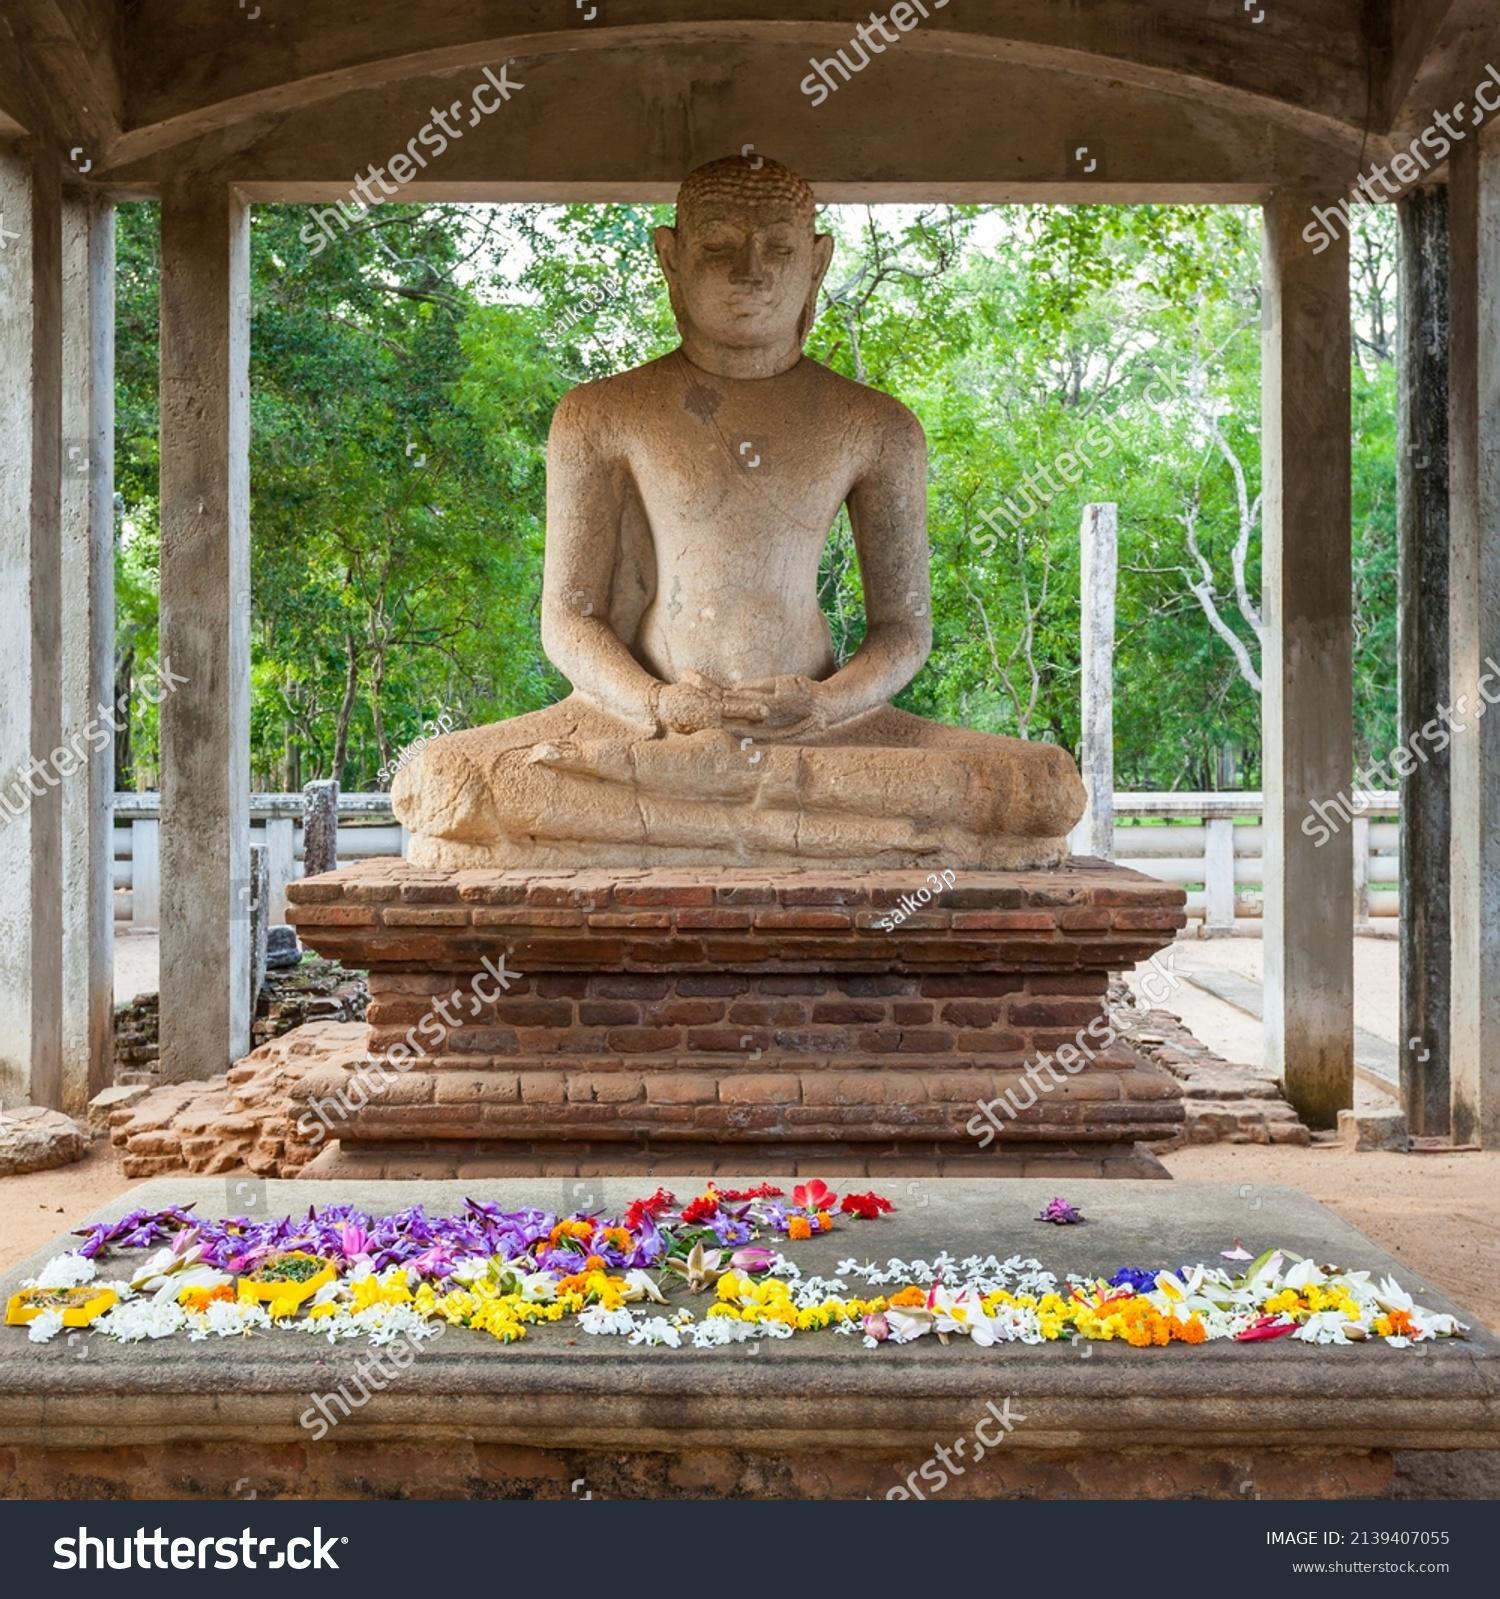 696 Samadhi Buddha Images Stock Photos Vectors Shutterstock